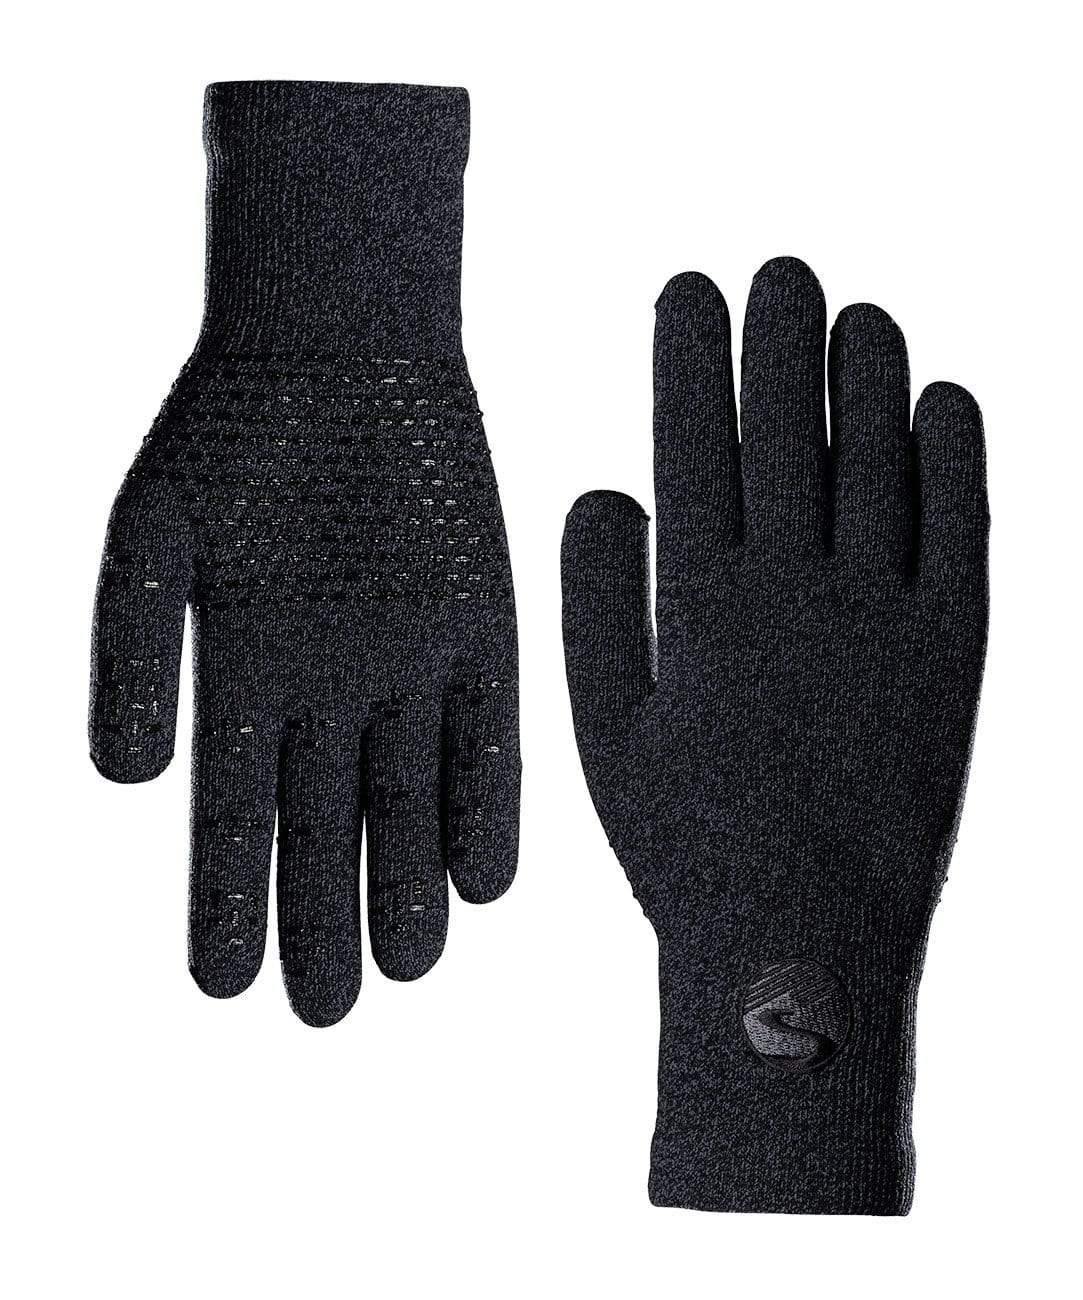 Pass Knit | Fall Waterproof Showers Crosspoint Gloves